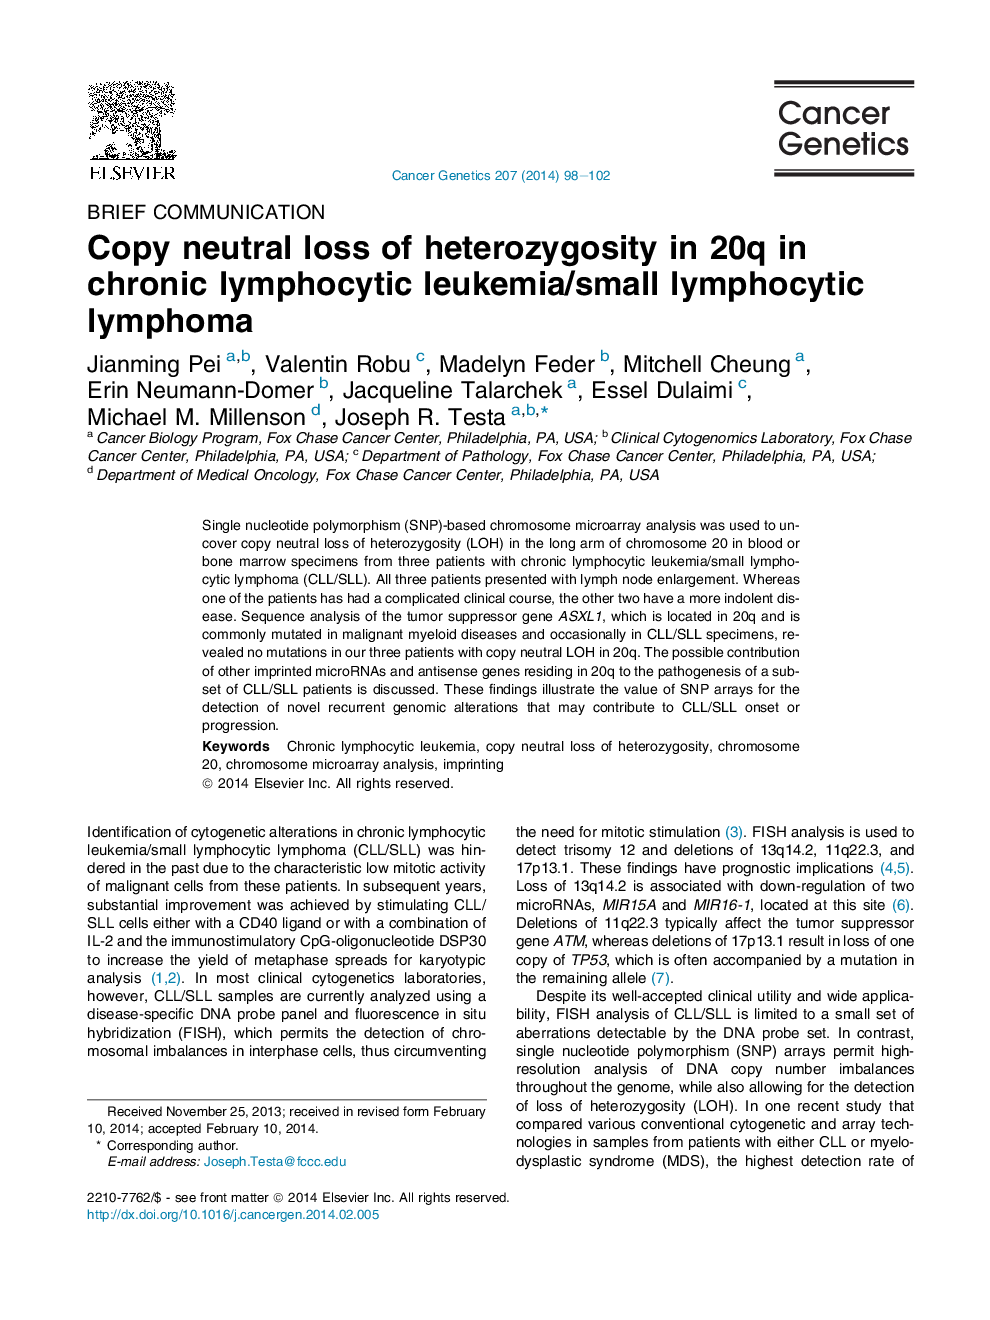 Copy neutral loss of heterozygosity in 20q in chronic lymphocytic leukemia/small lymphocytic lymphoma